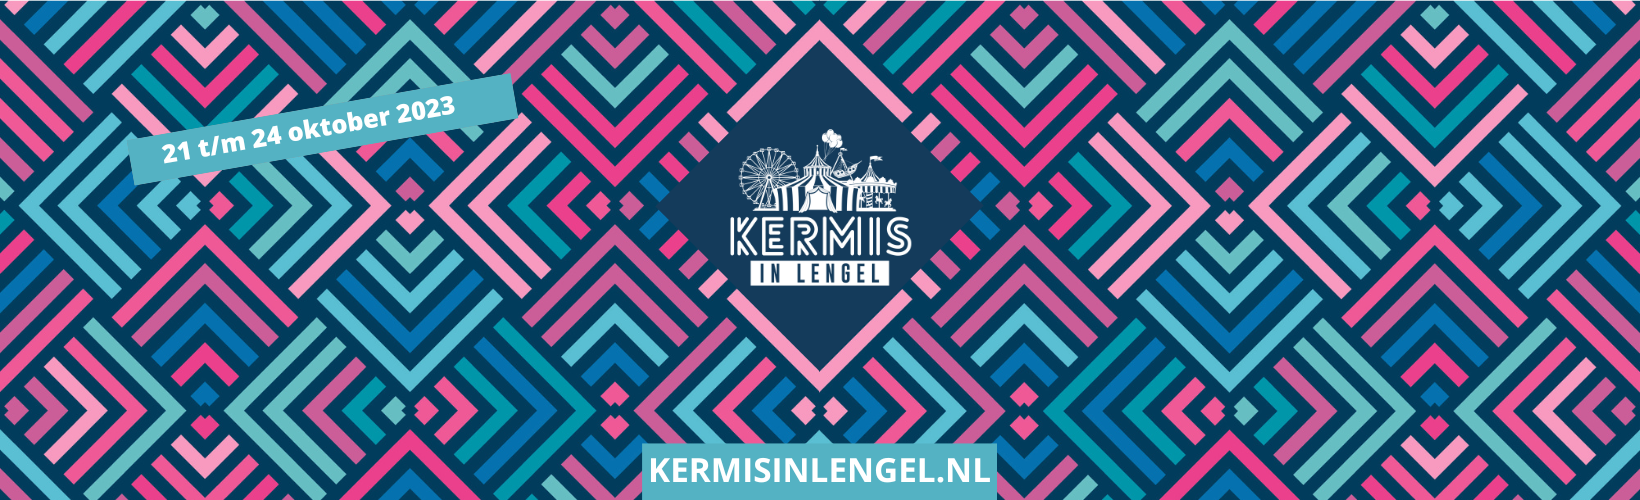 Kermis in Lengel 2023 –> zaterdag